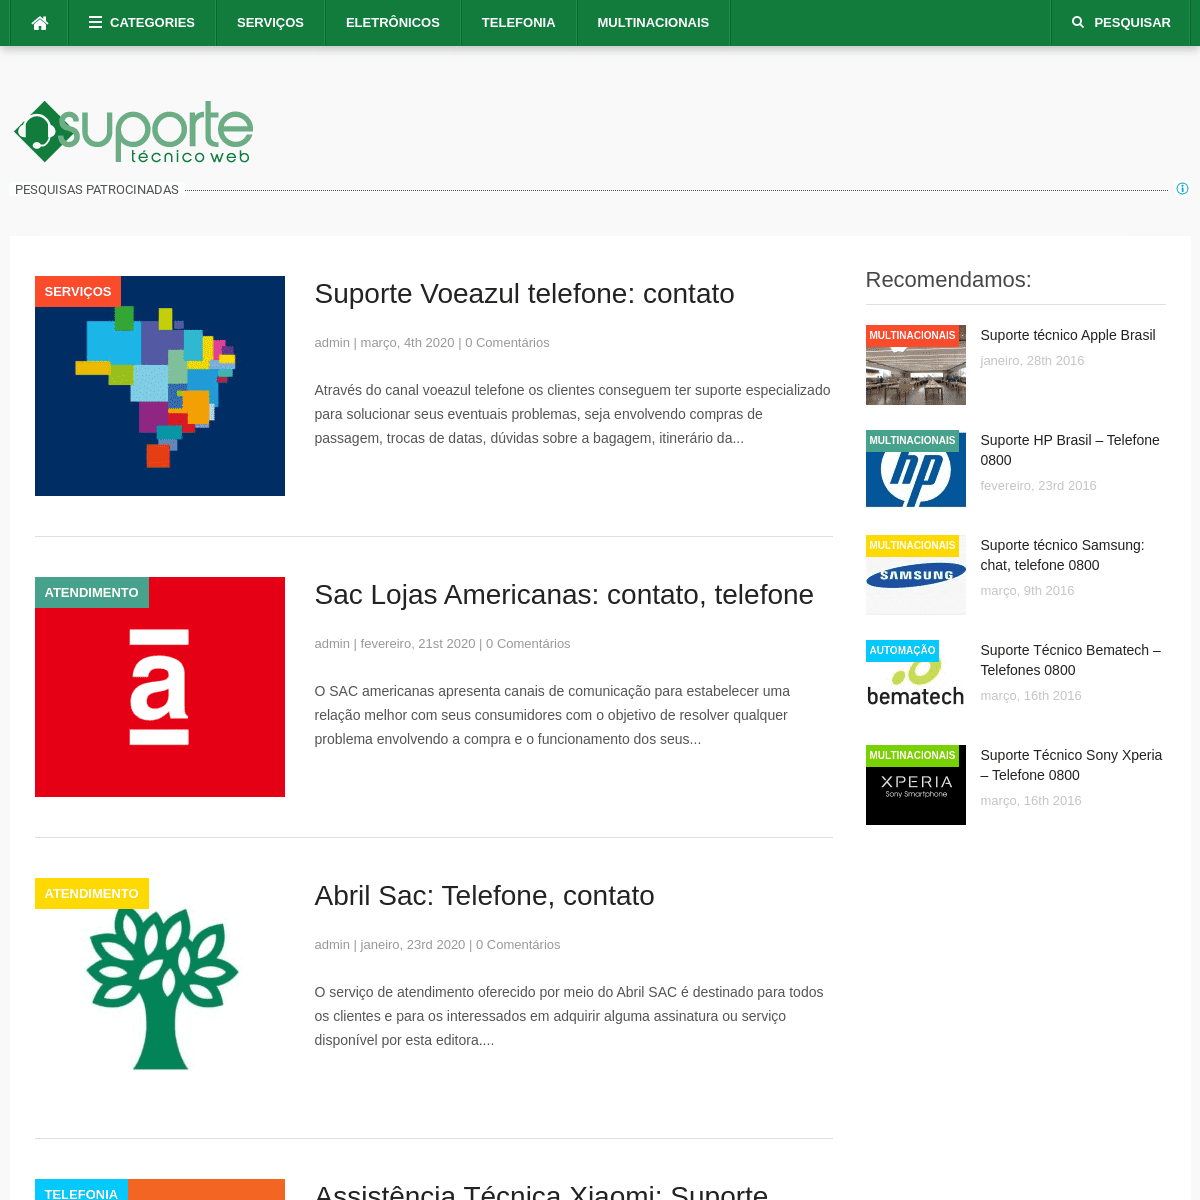 A complete backup of suportetecnicoweb.com.br